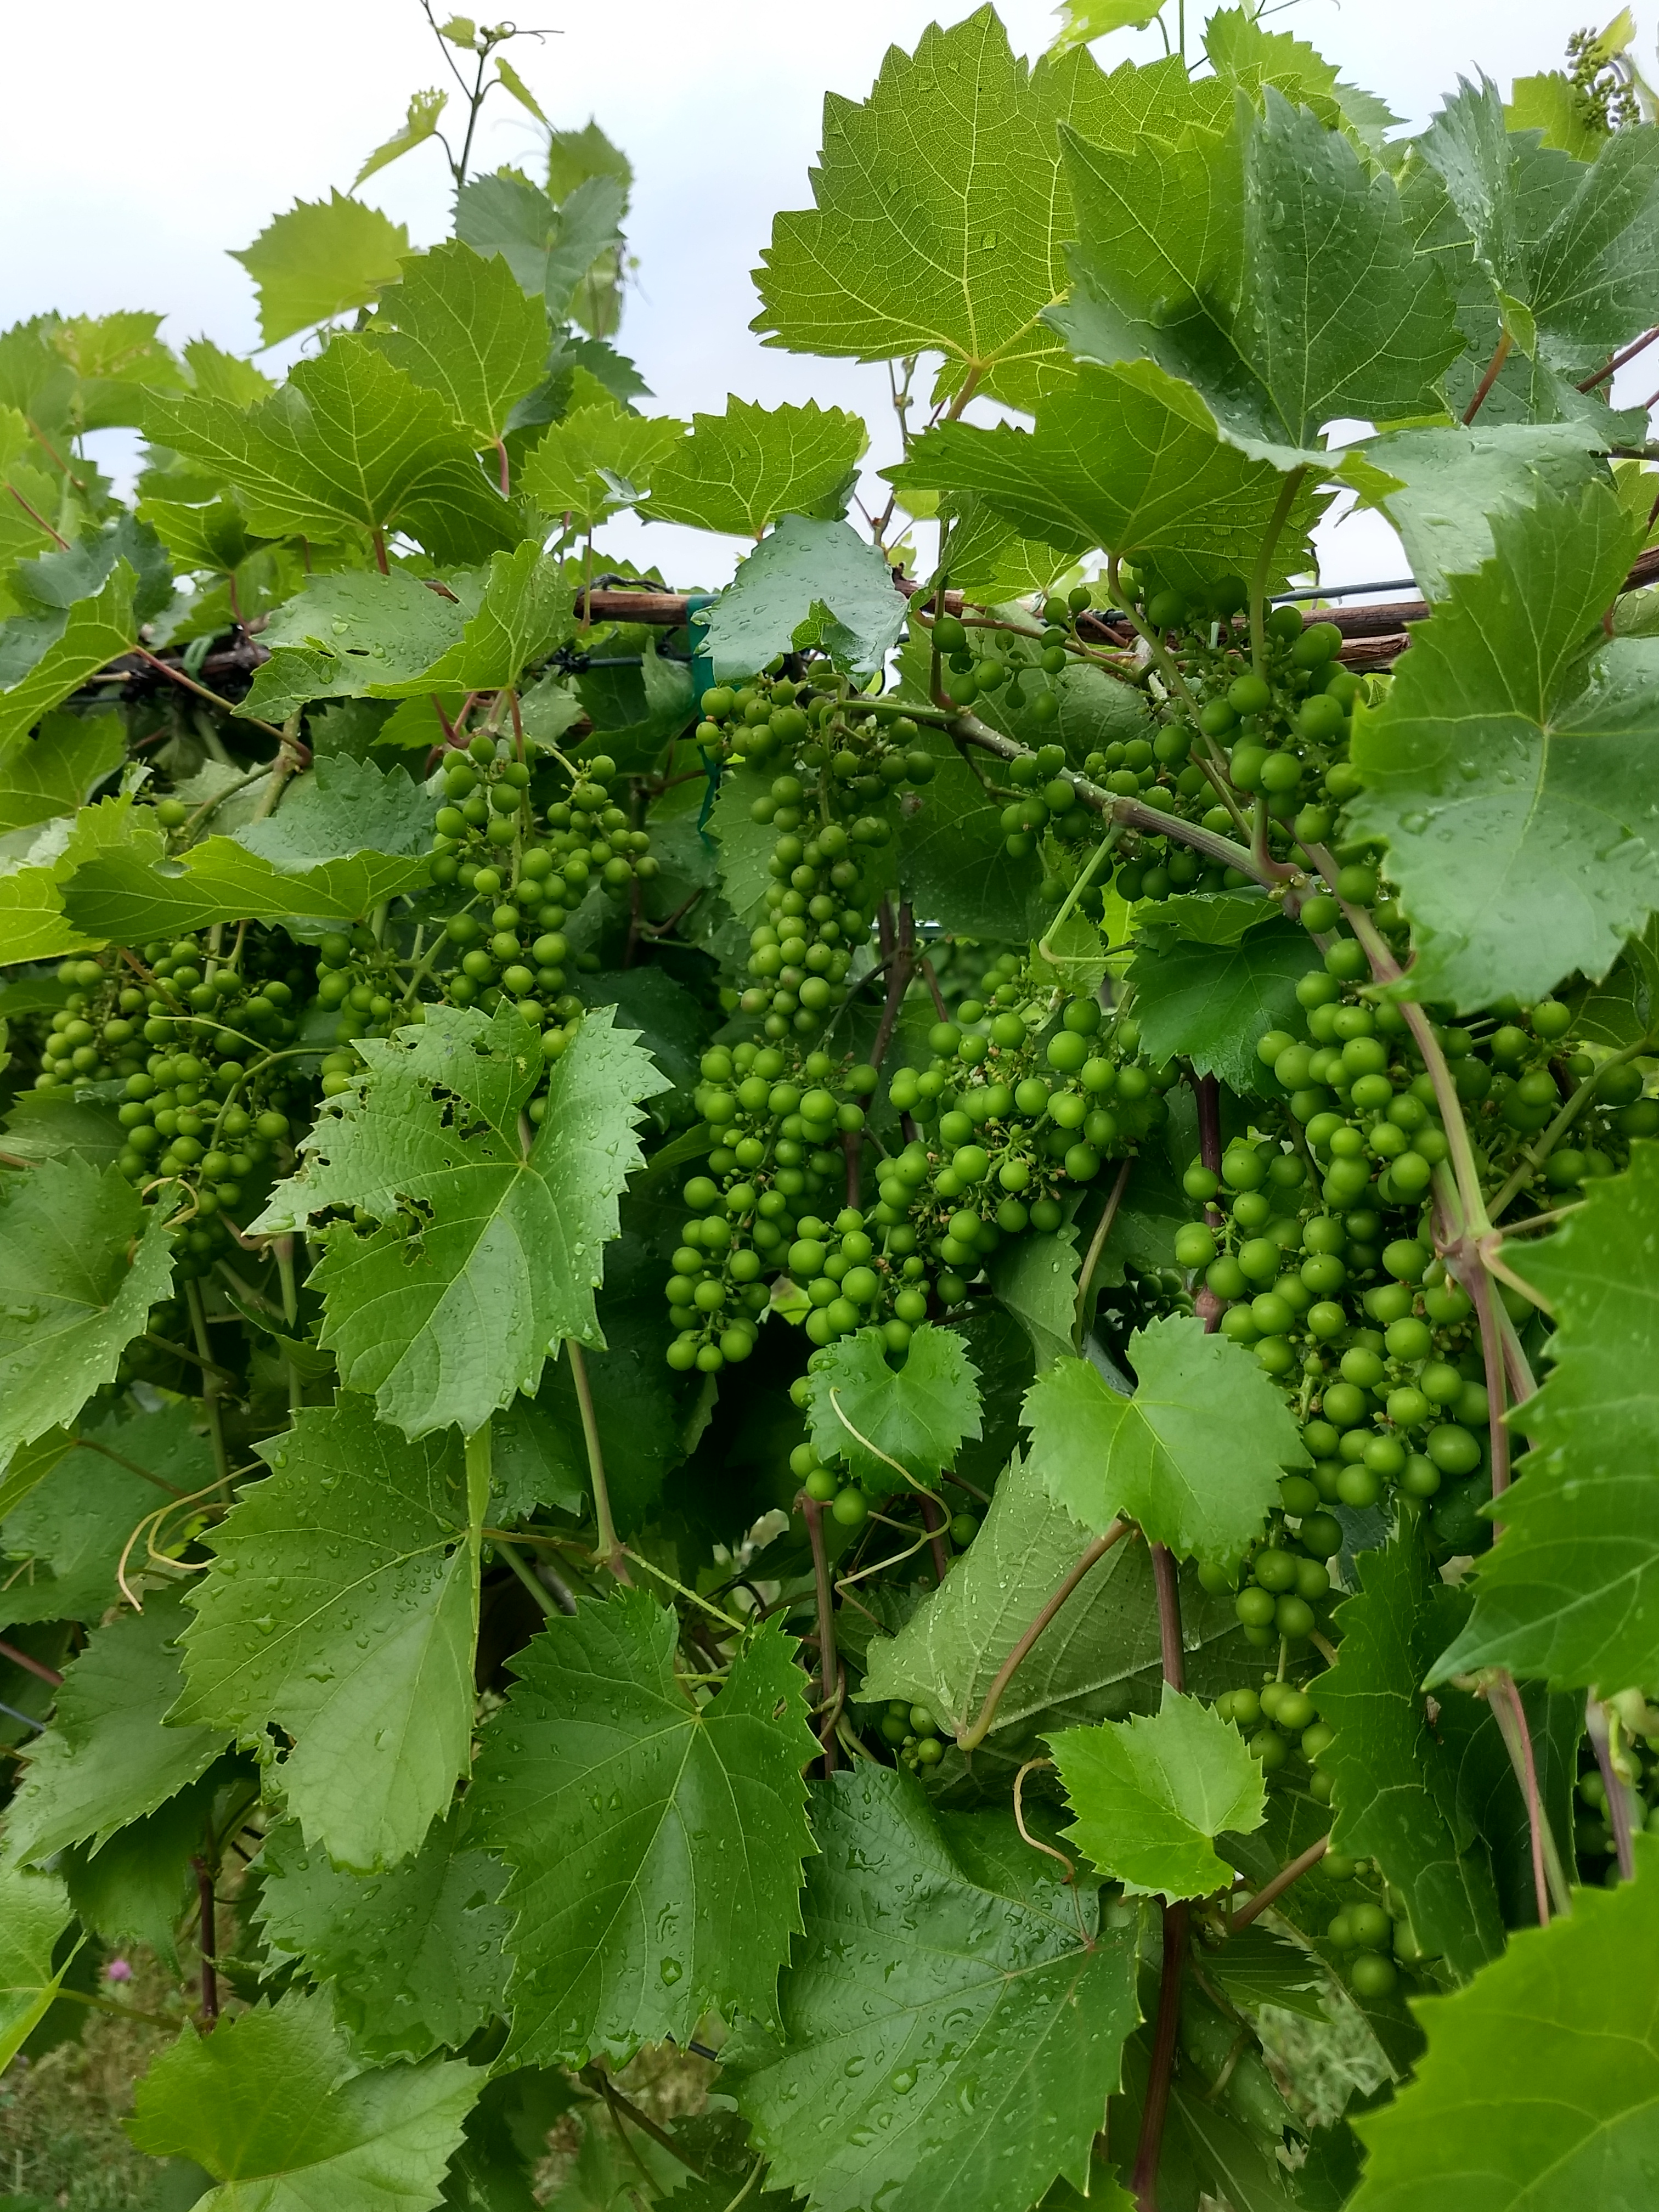 Pea-sized grape berries.